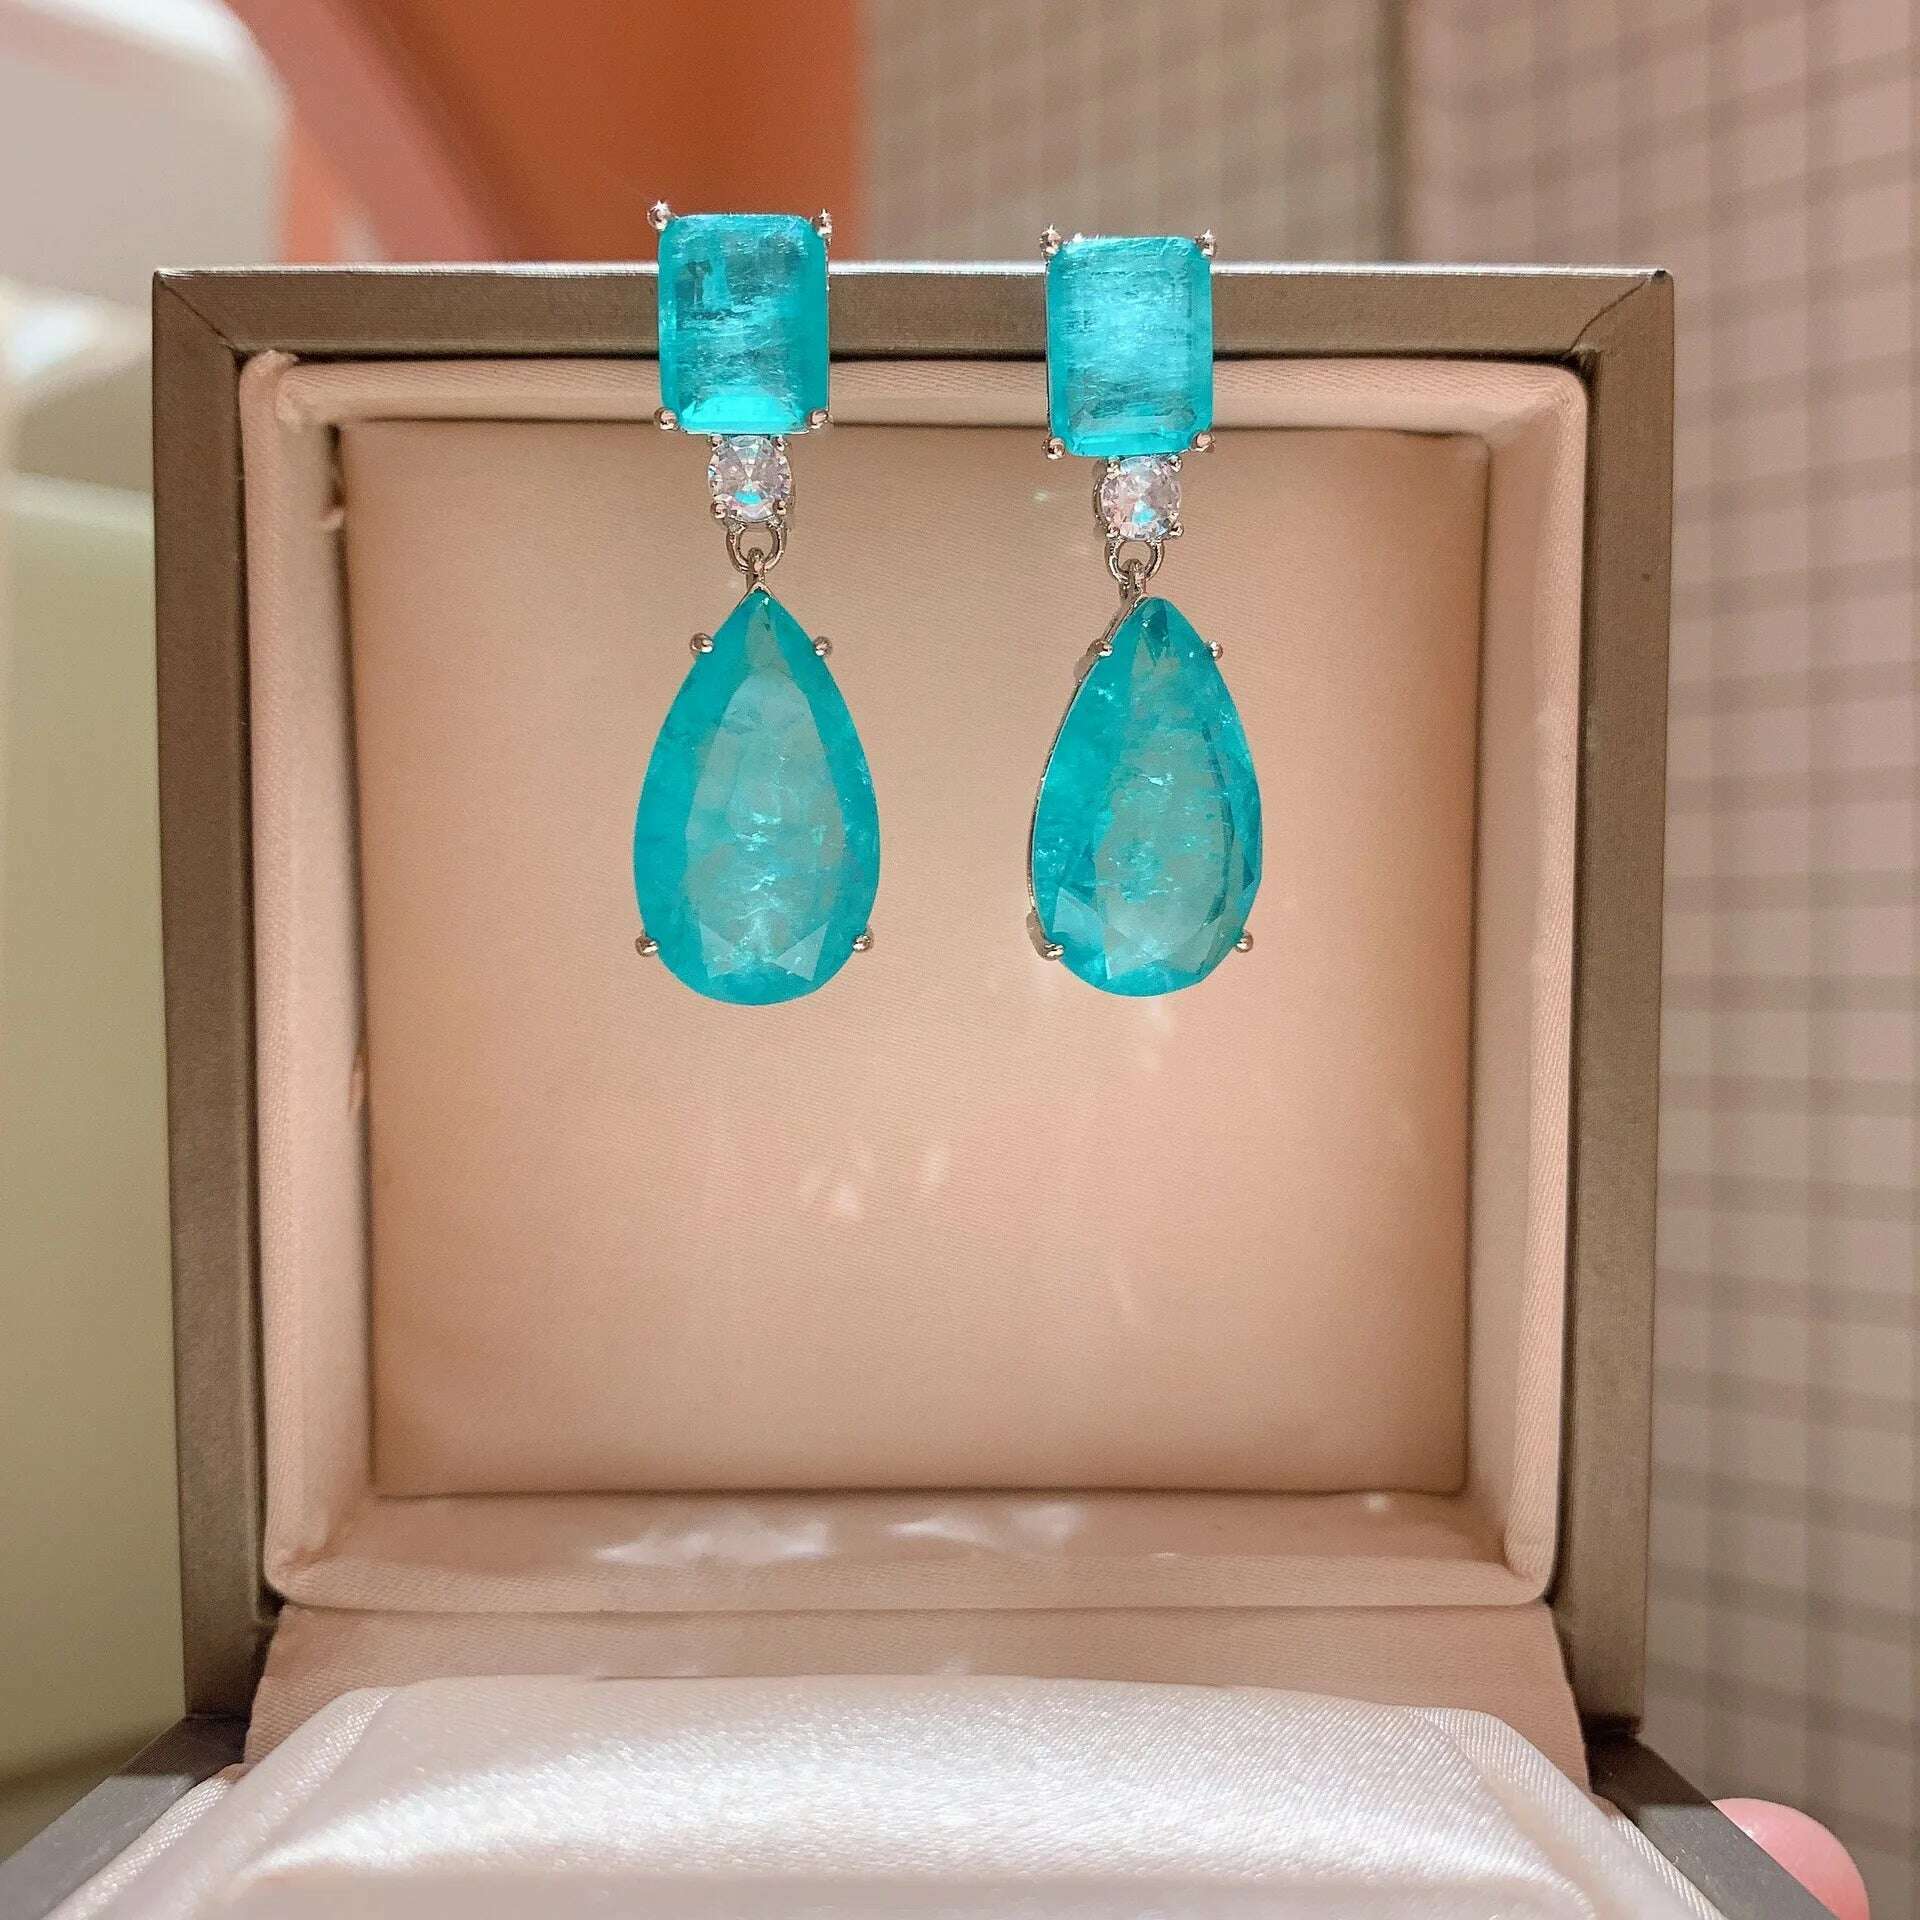 KIMLUD, JitDoo Trend Earrings for Women Paraiba Tourmaline Emerald Gemstone Big Drop Earrings Cocktail Party Fine Jewelry Female Gift, KIMLUD Women's Clothes